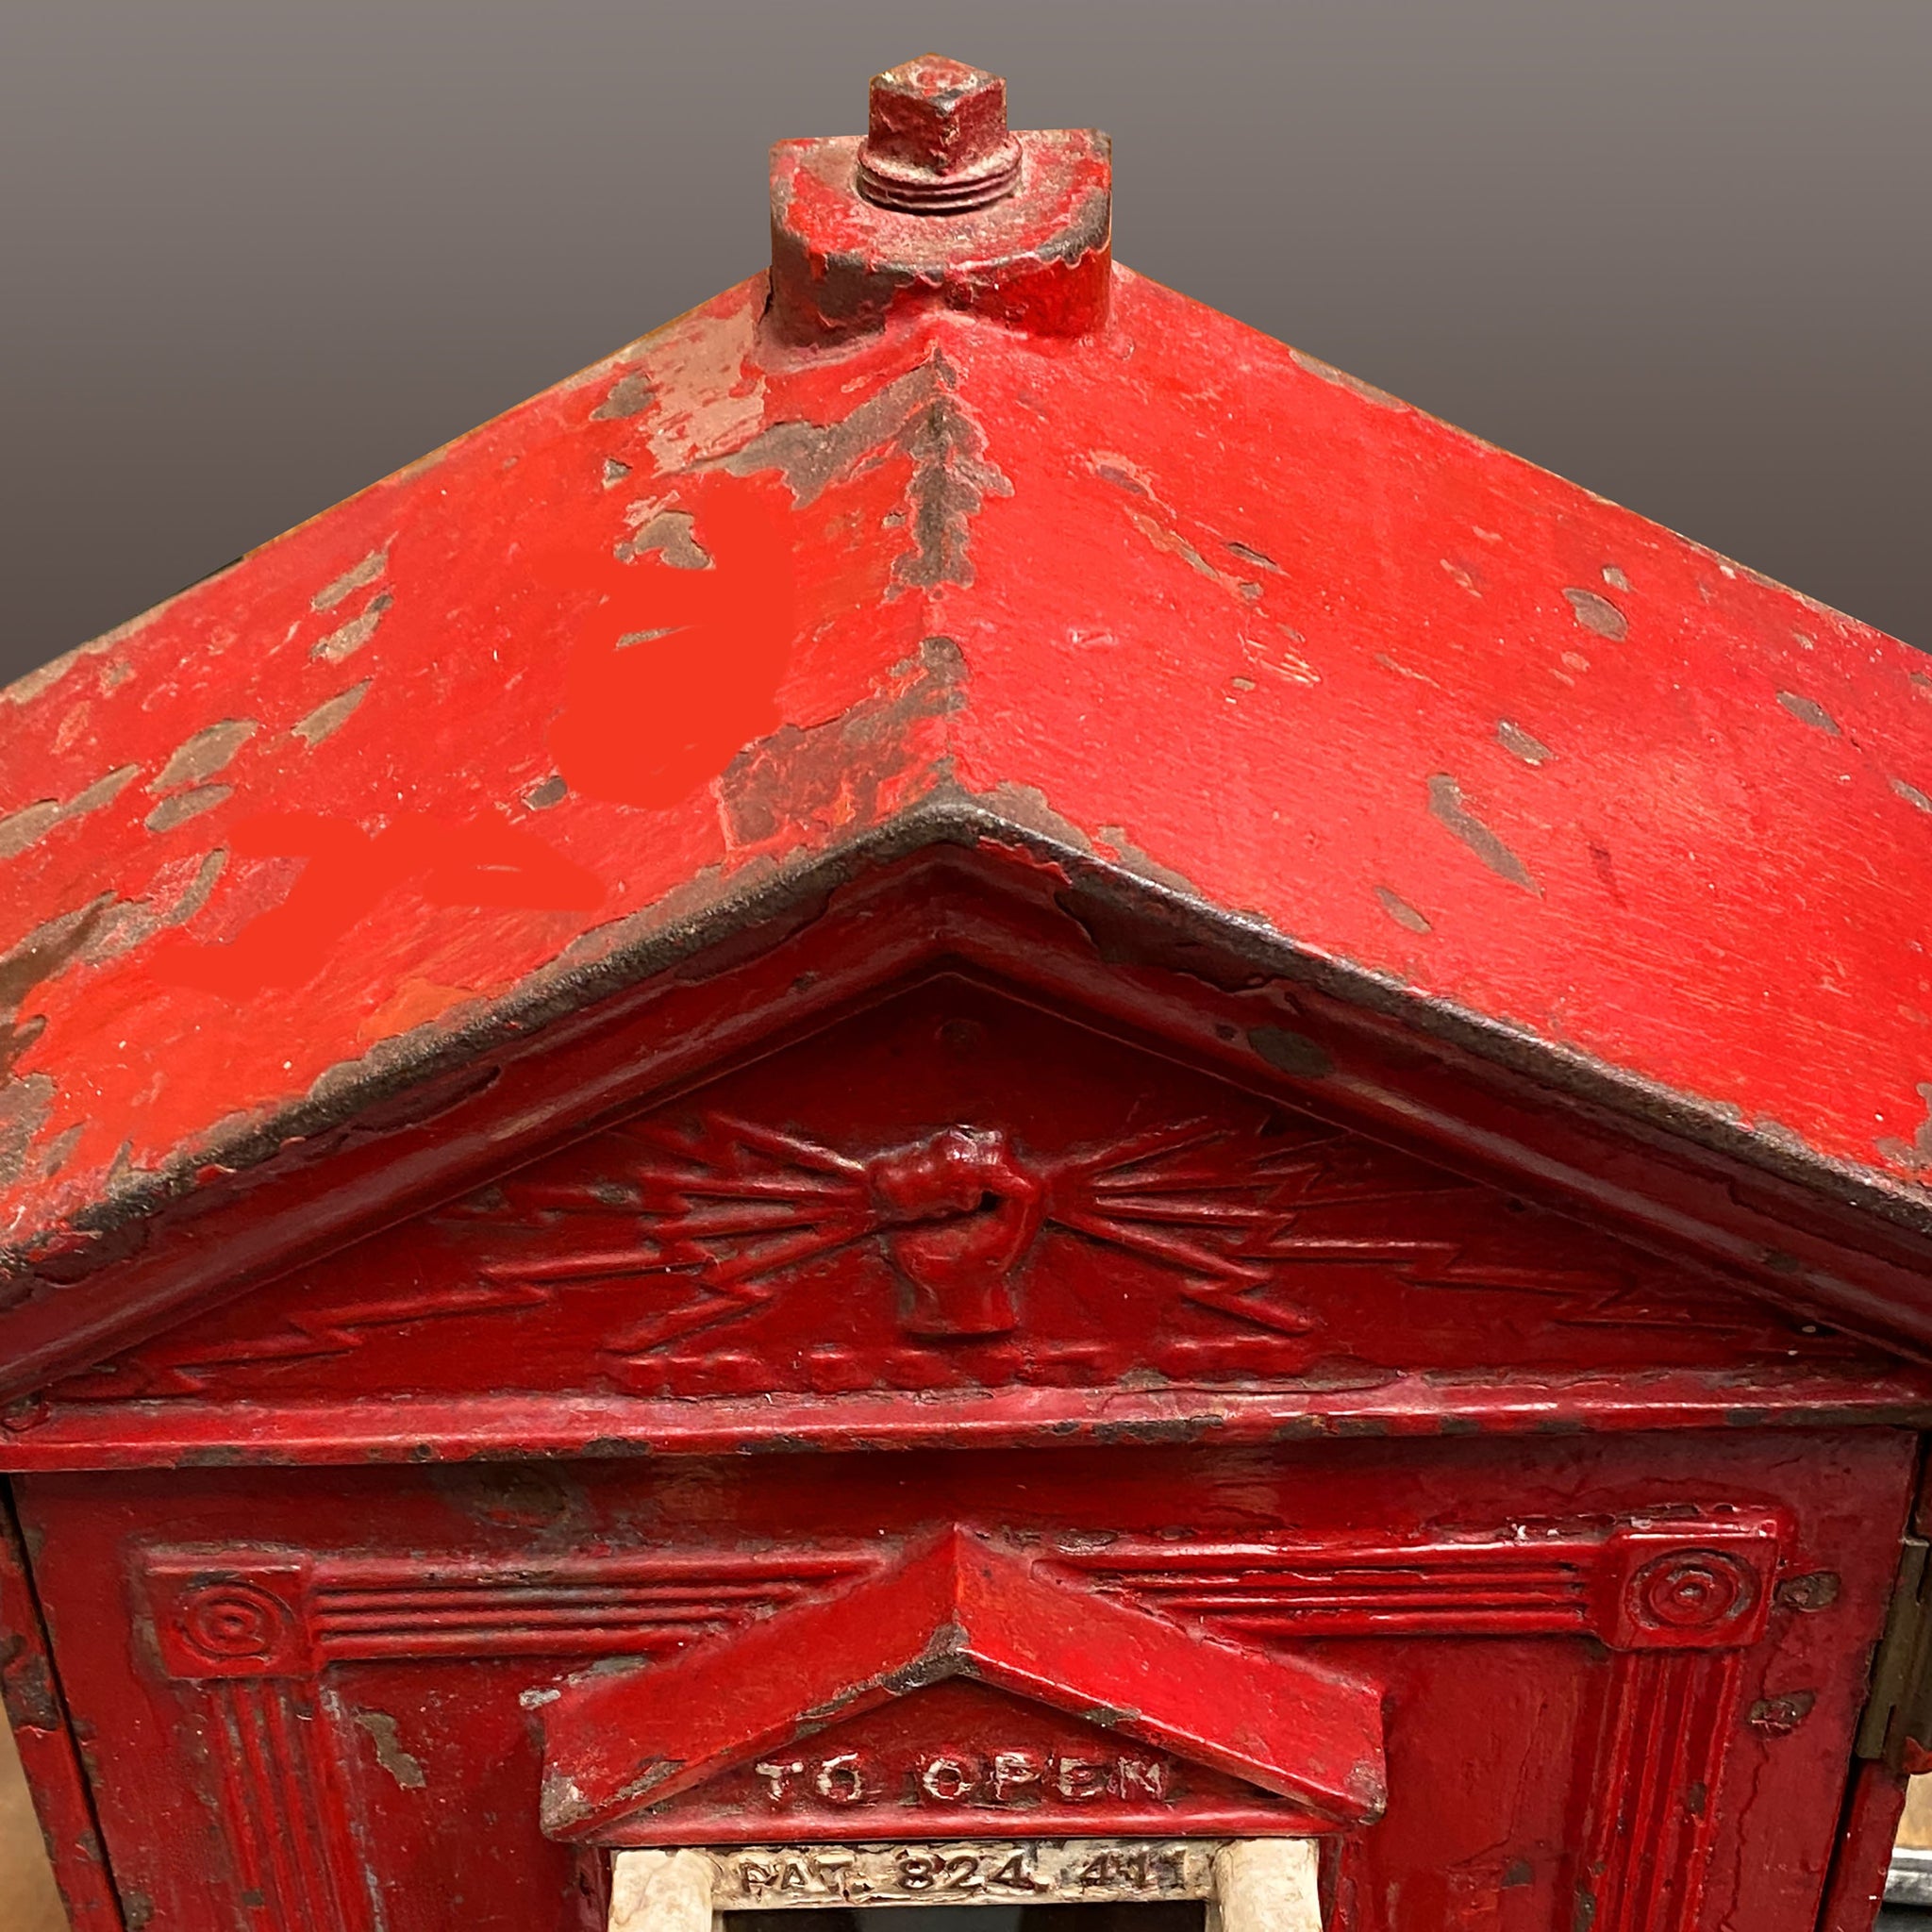 Vintage Fire Alarm Box